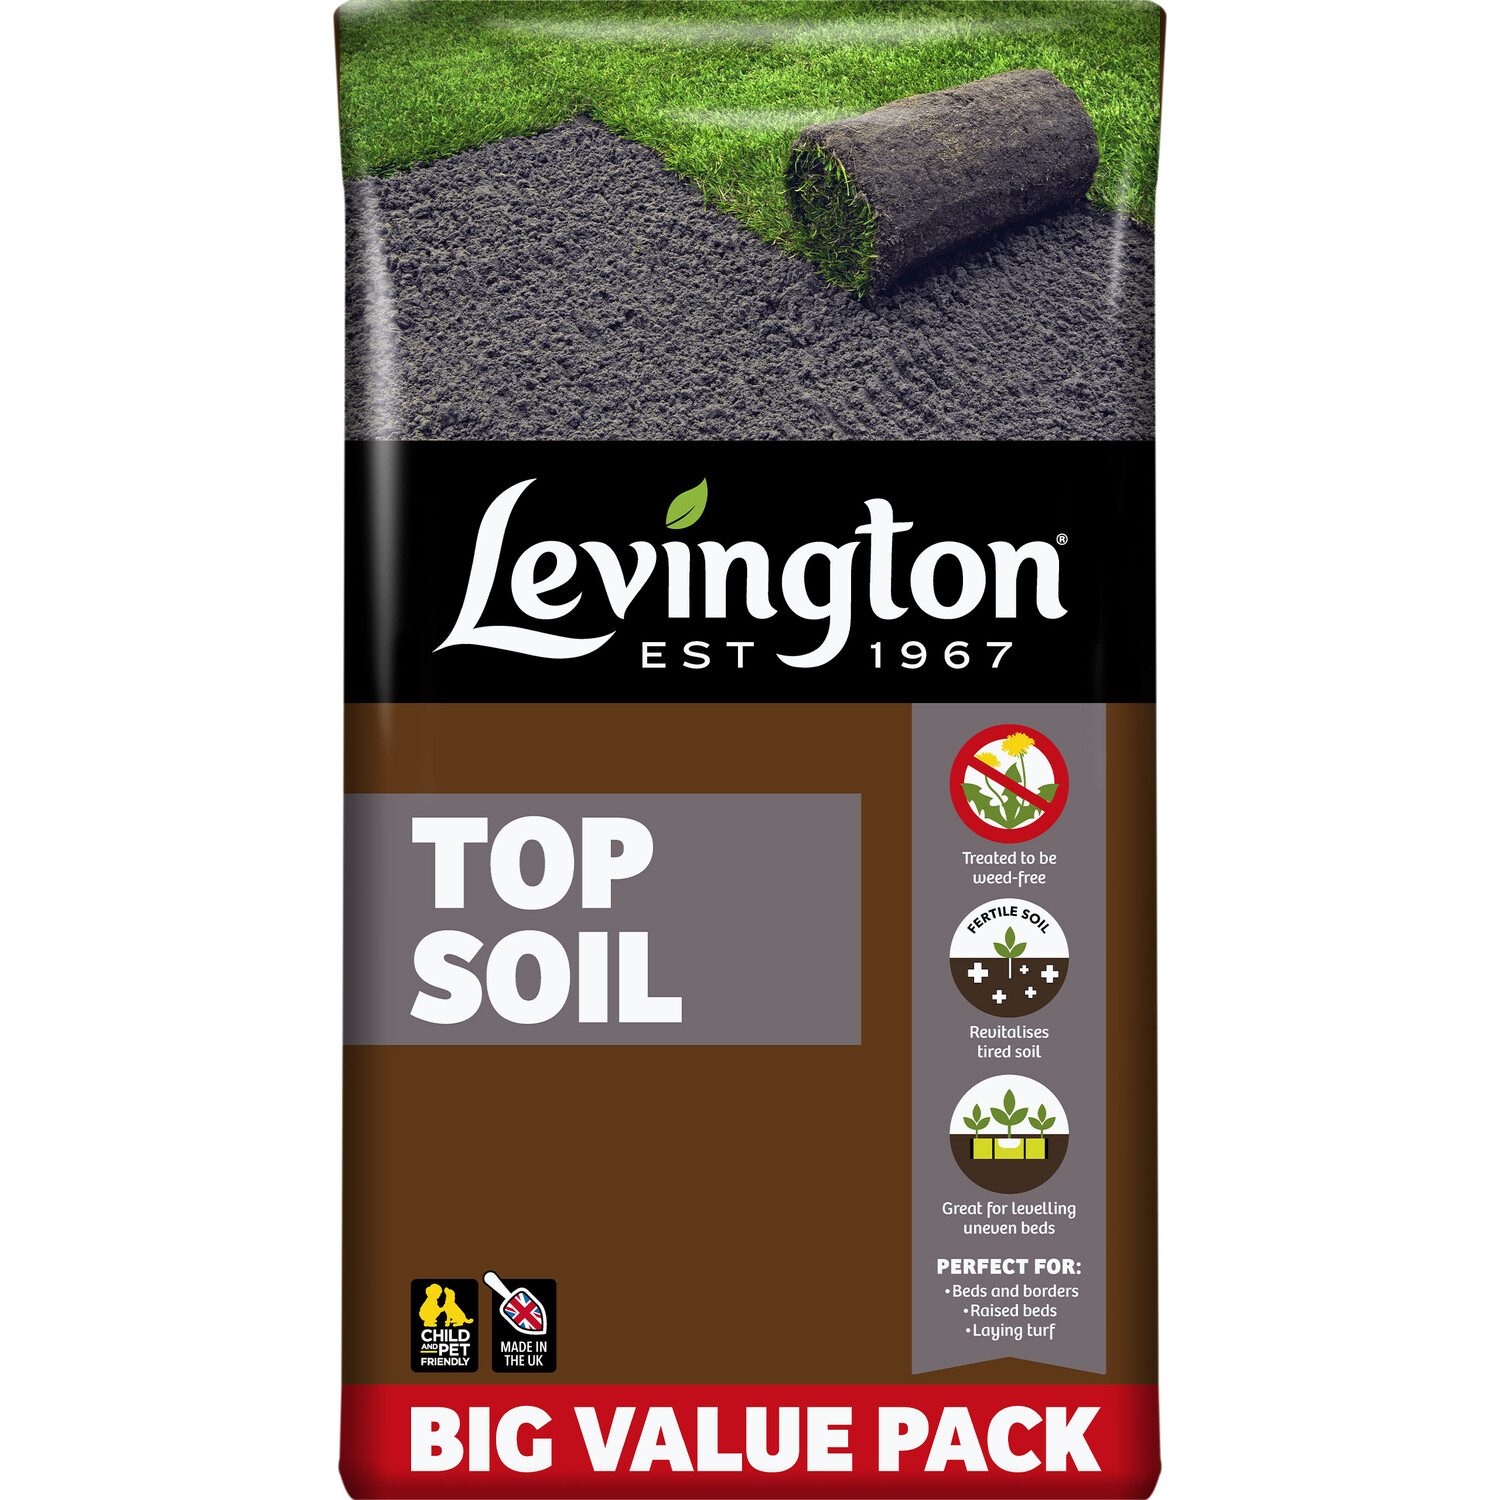 Levington Peat Free Top Soil Image